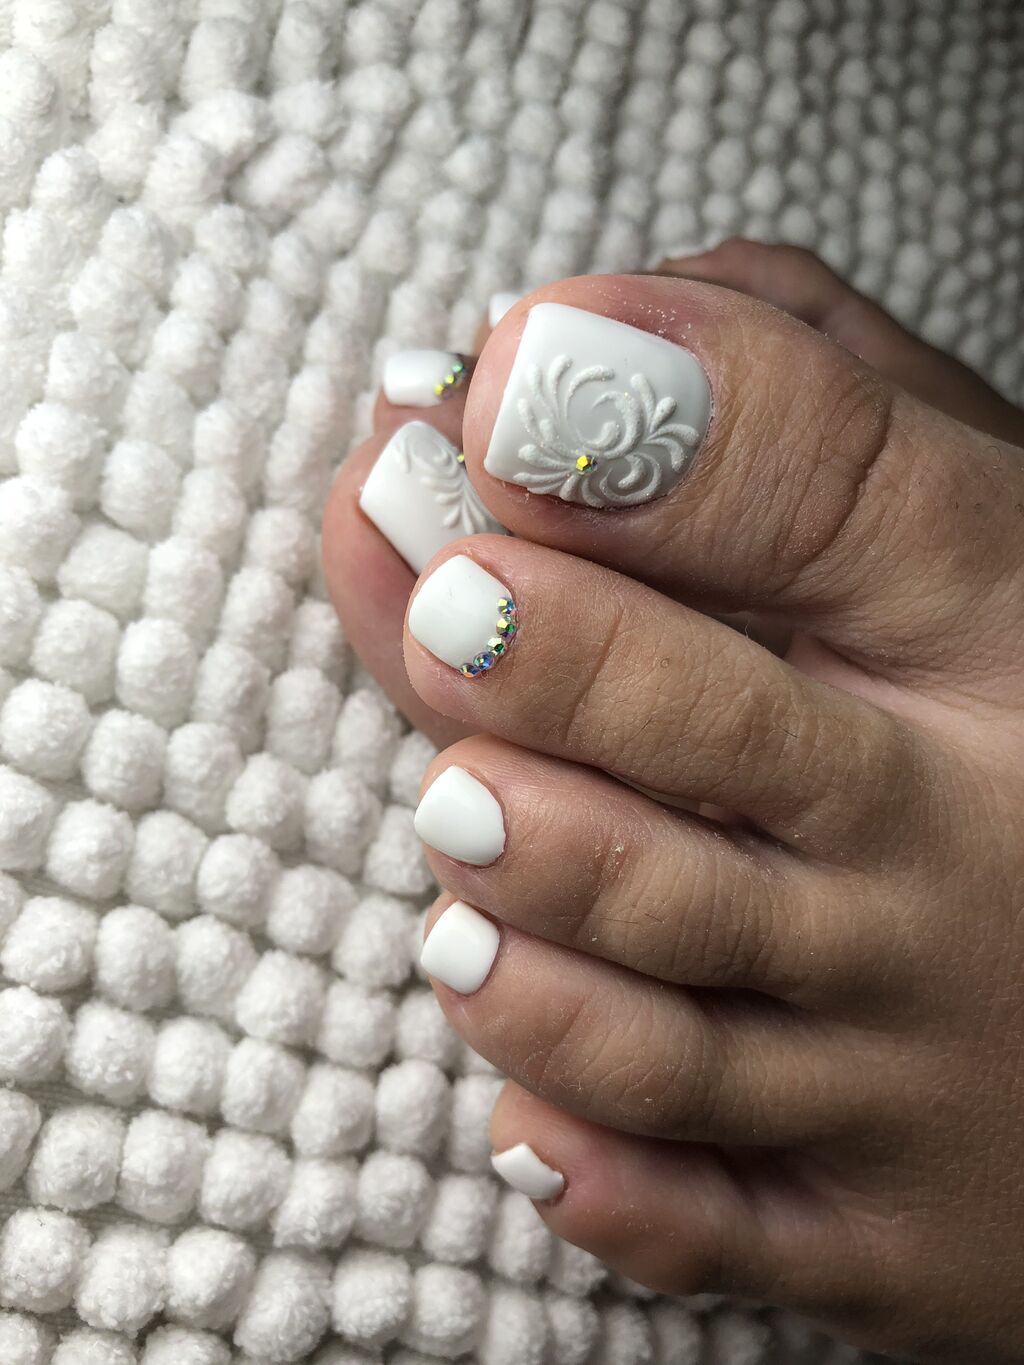 Bohemian Summer White Toe Nail Designs